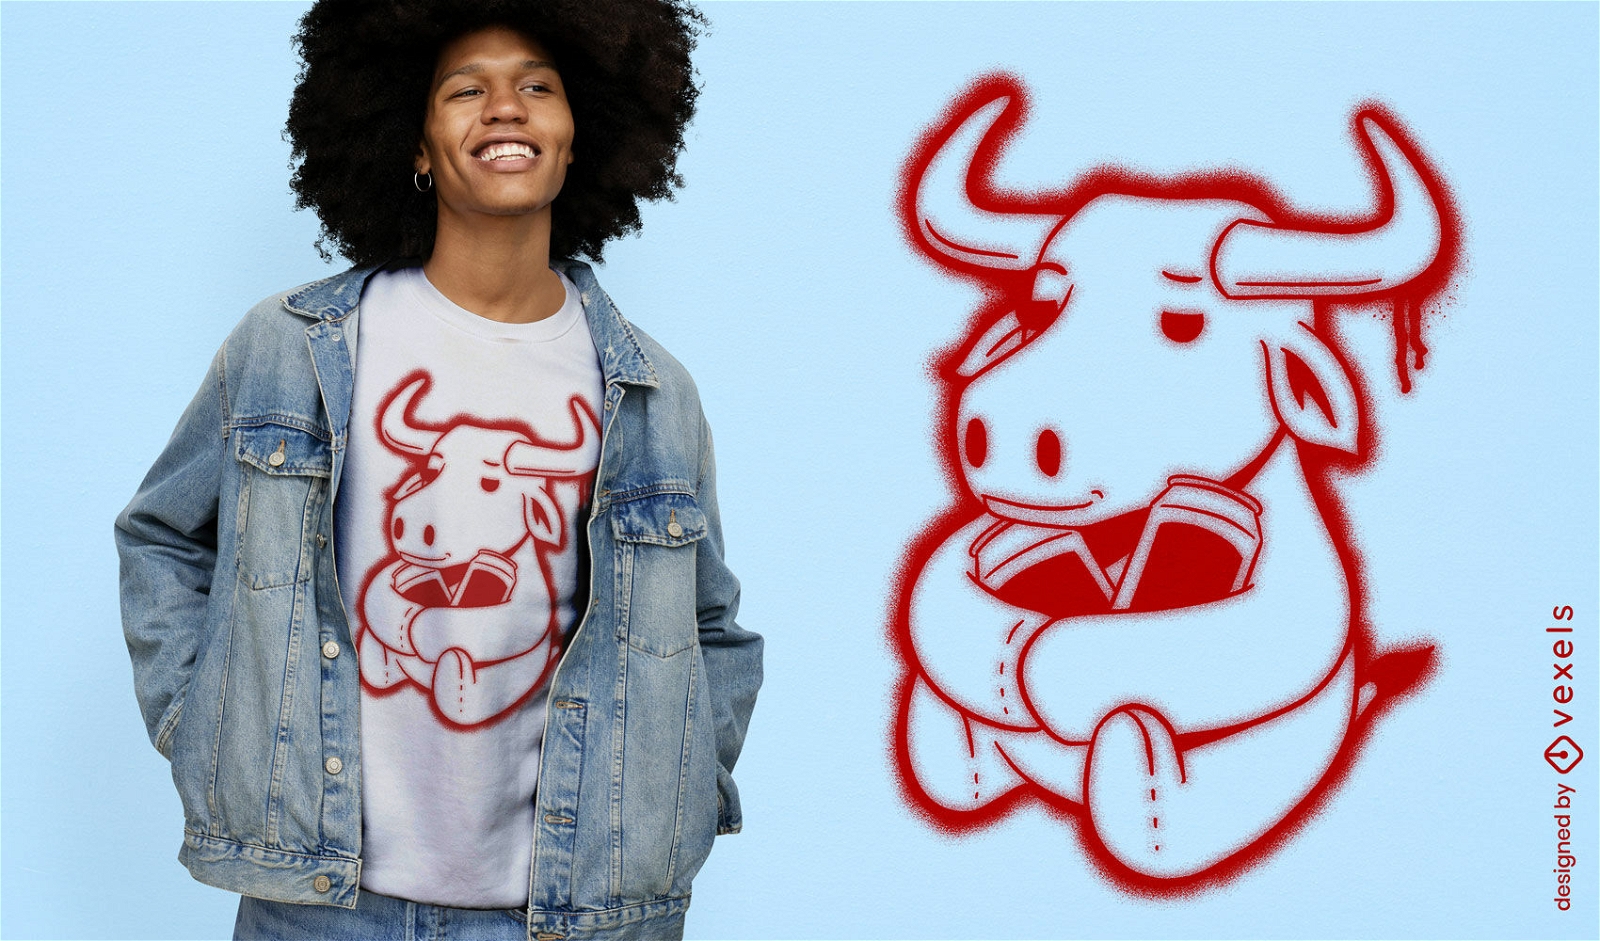 Dise?o de camiseta de graffiti de toro.